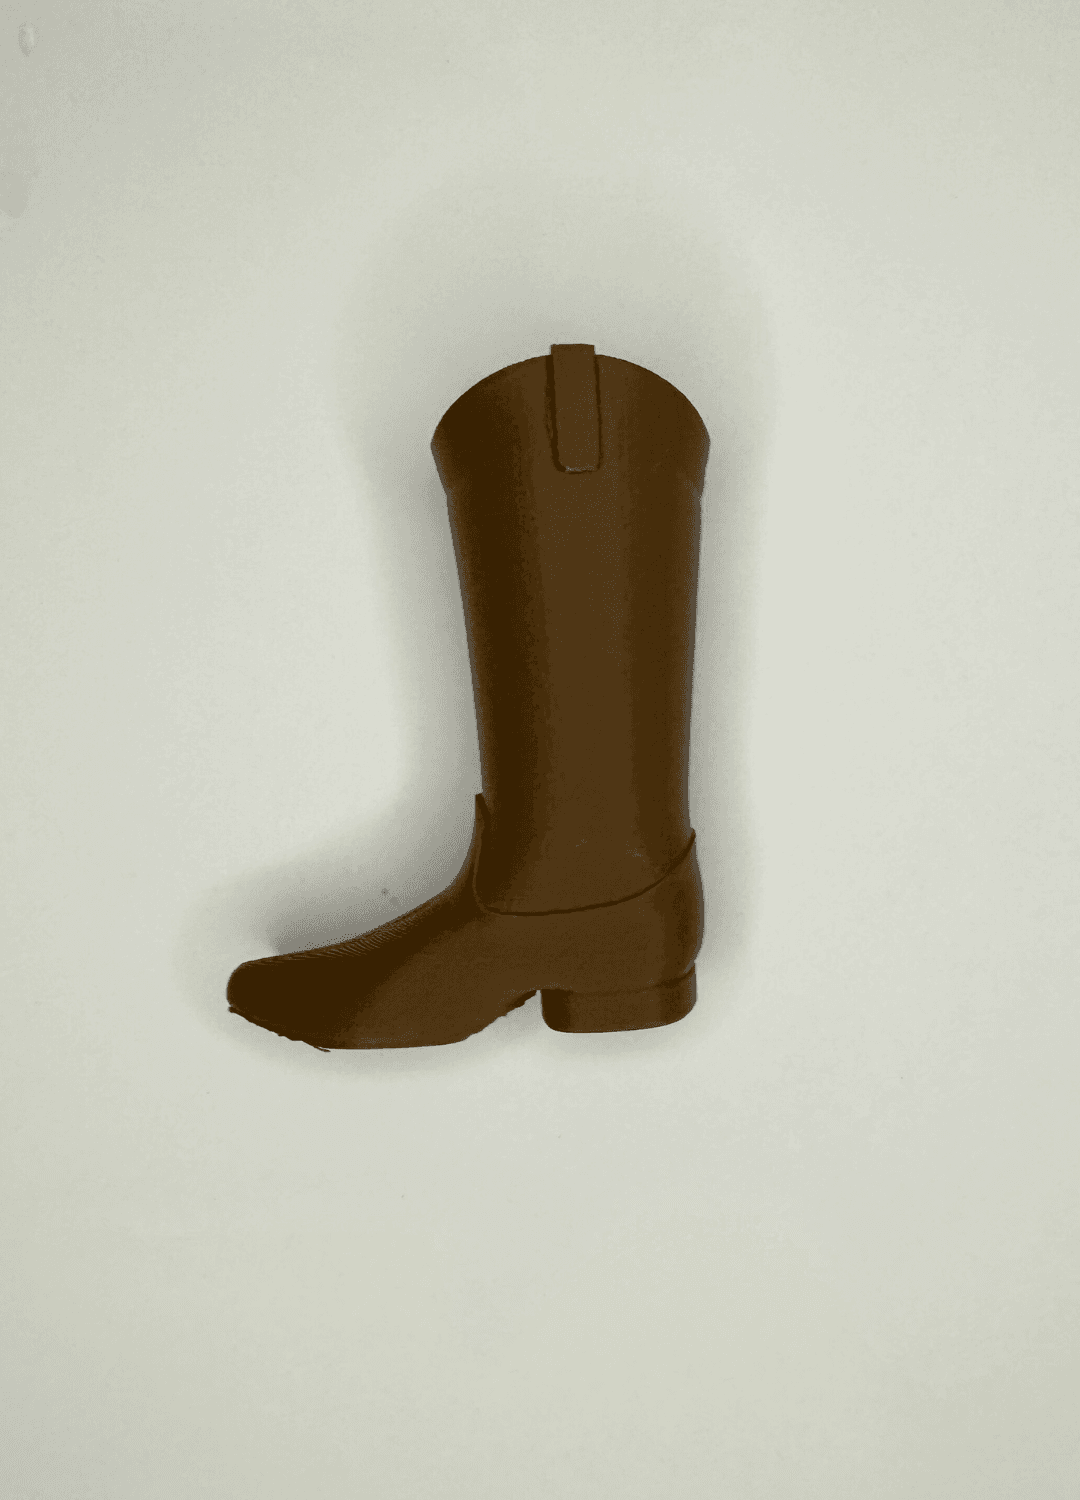 Cowboy Boot - simple 3d model